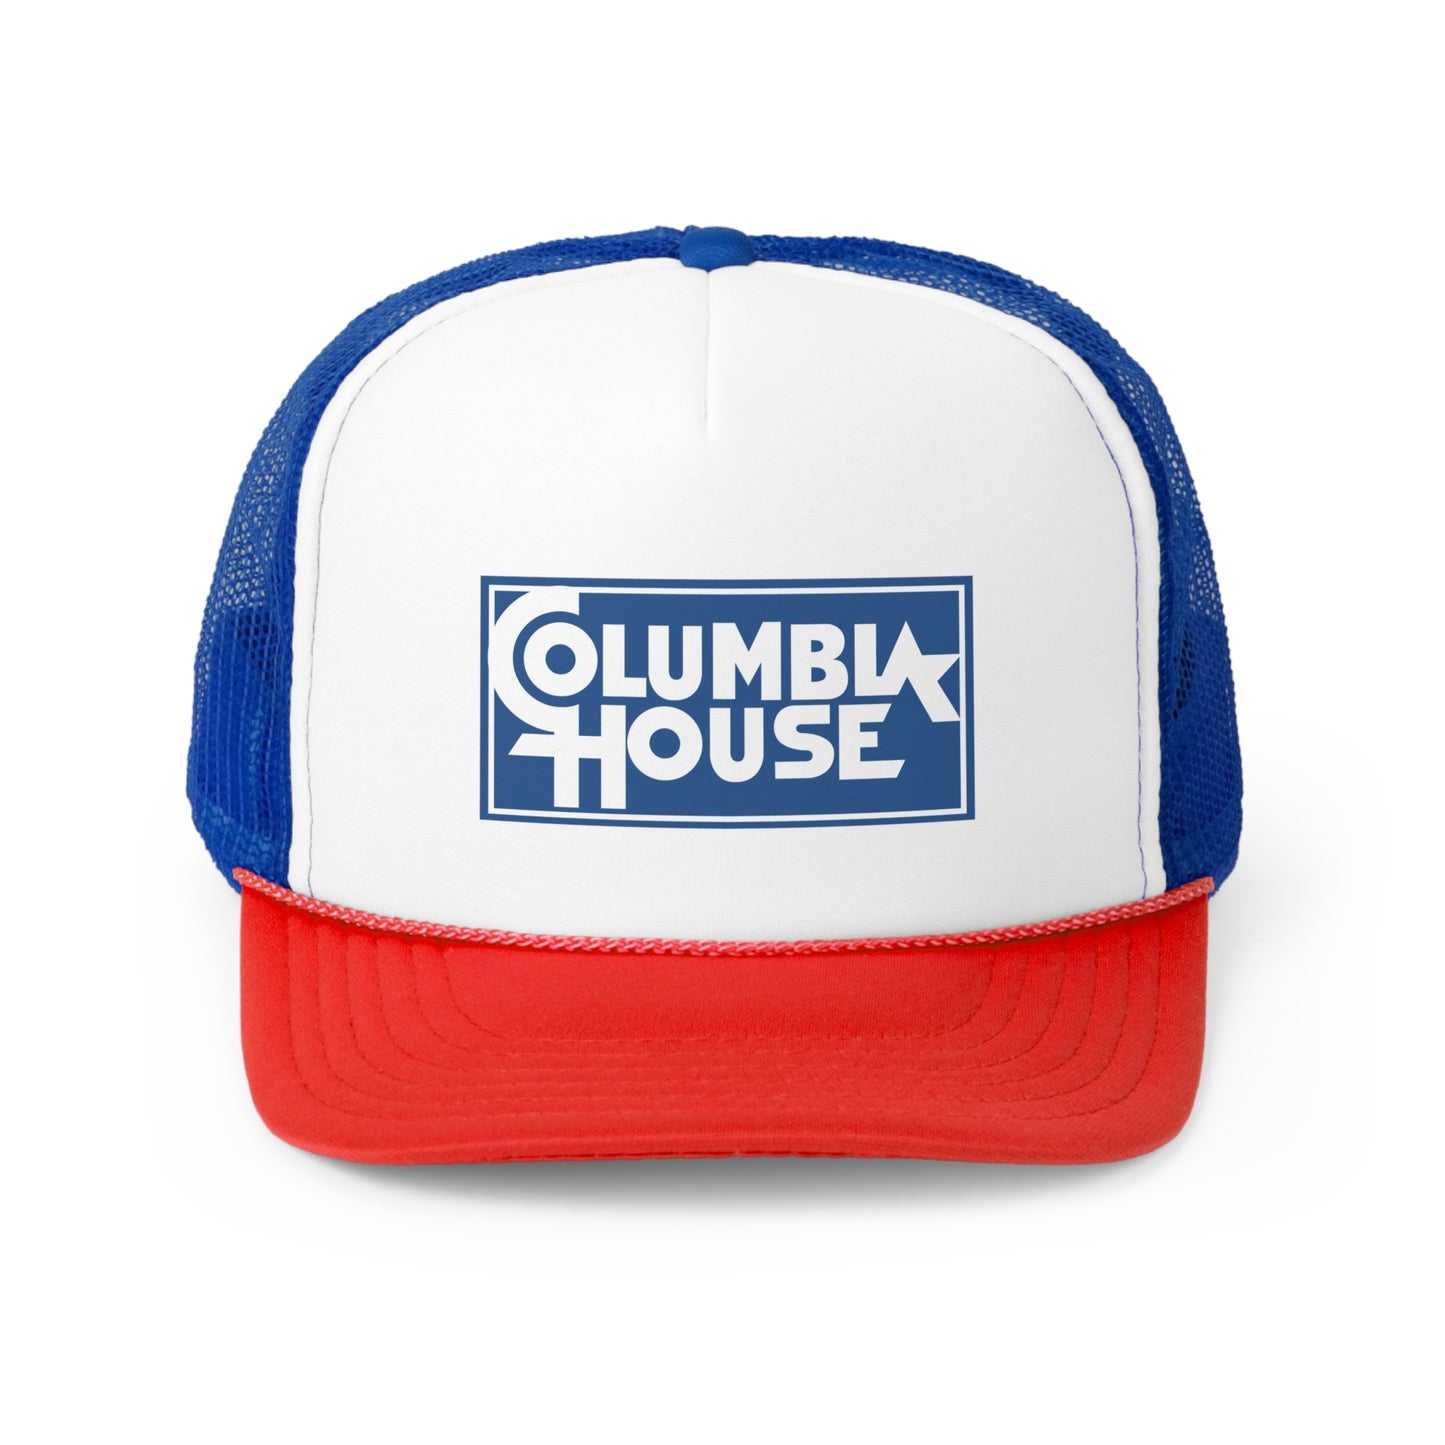 Columbia House Non Distressed Logo Canadian Nostalgia Trucker Cap